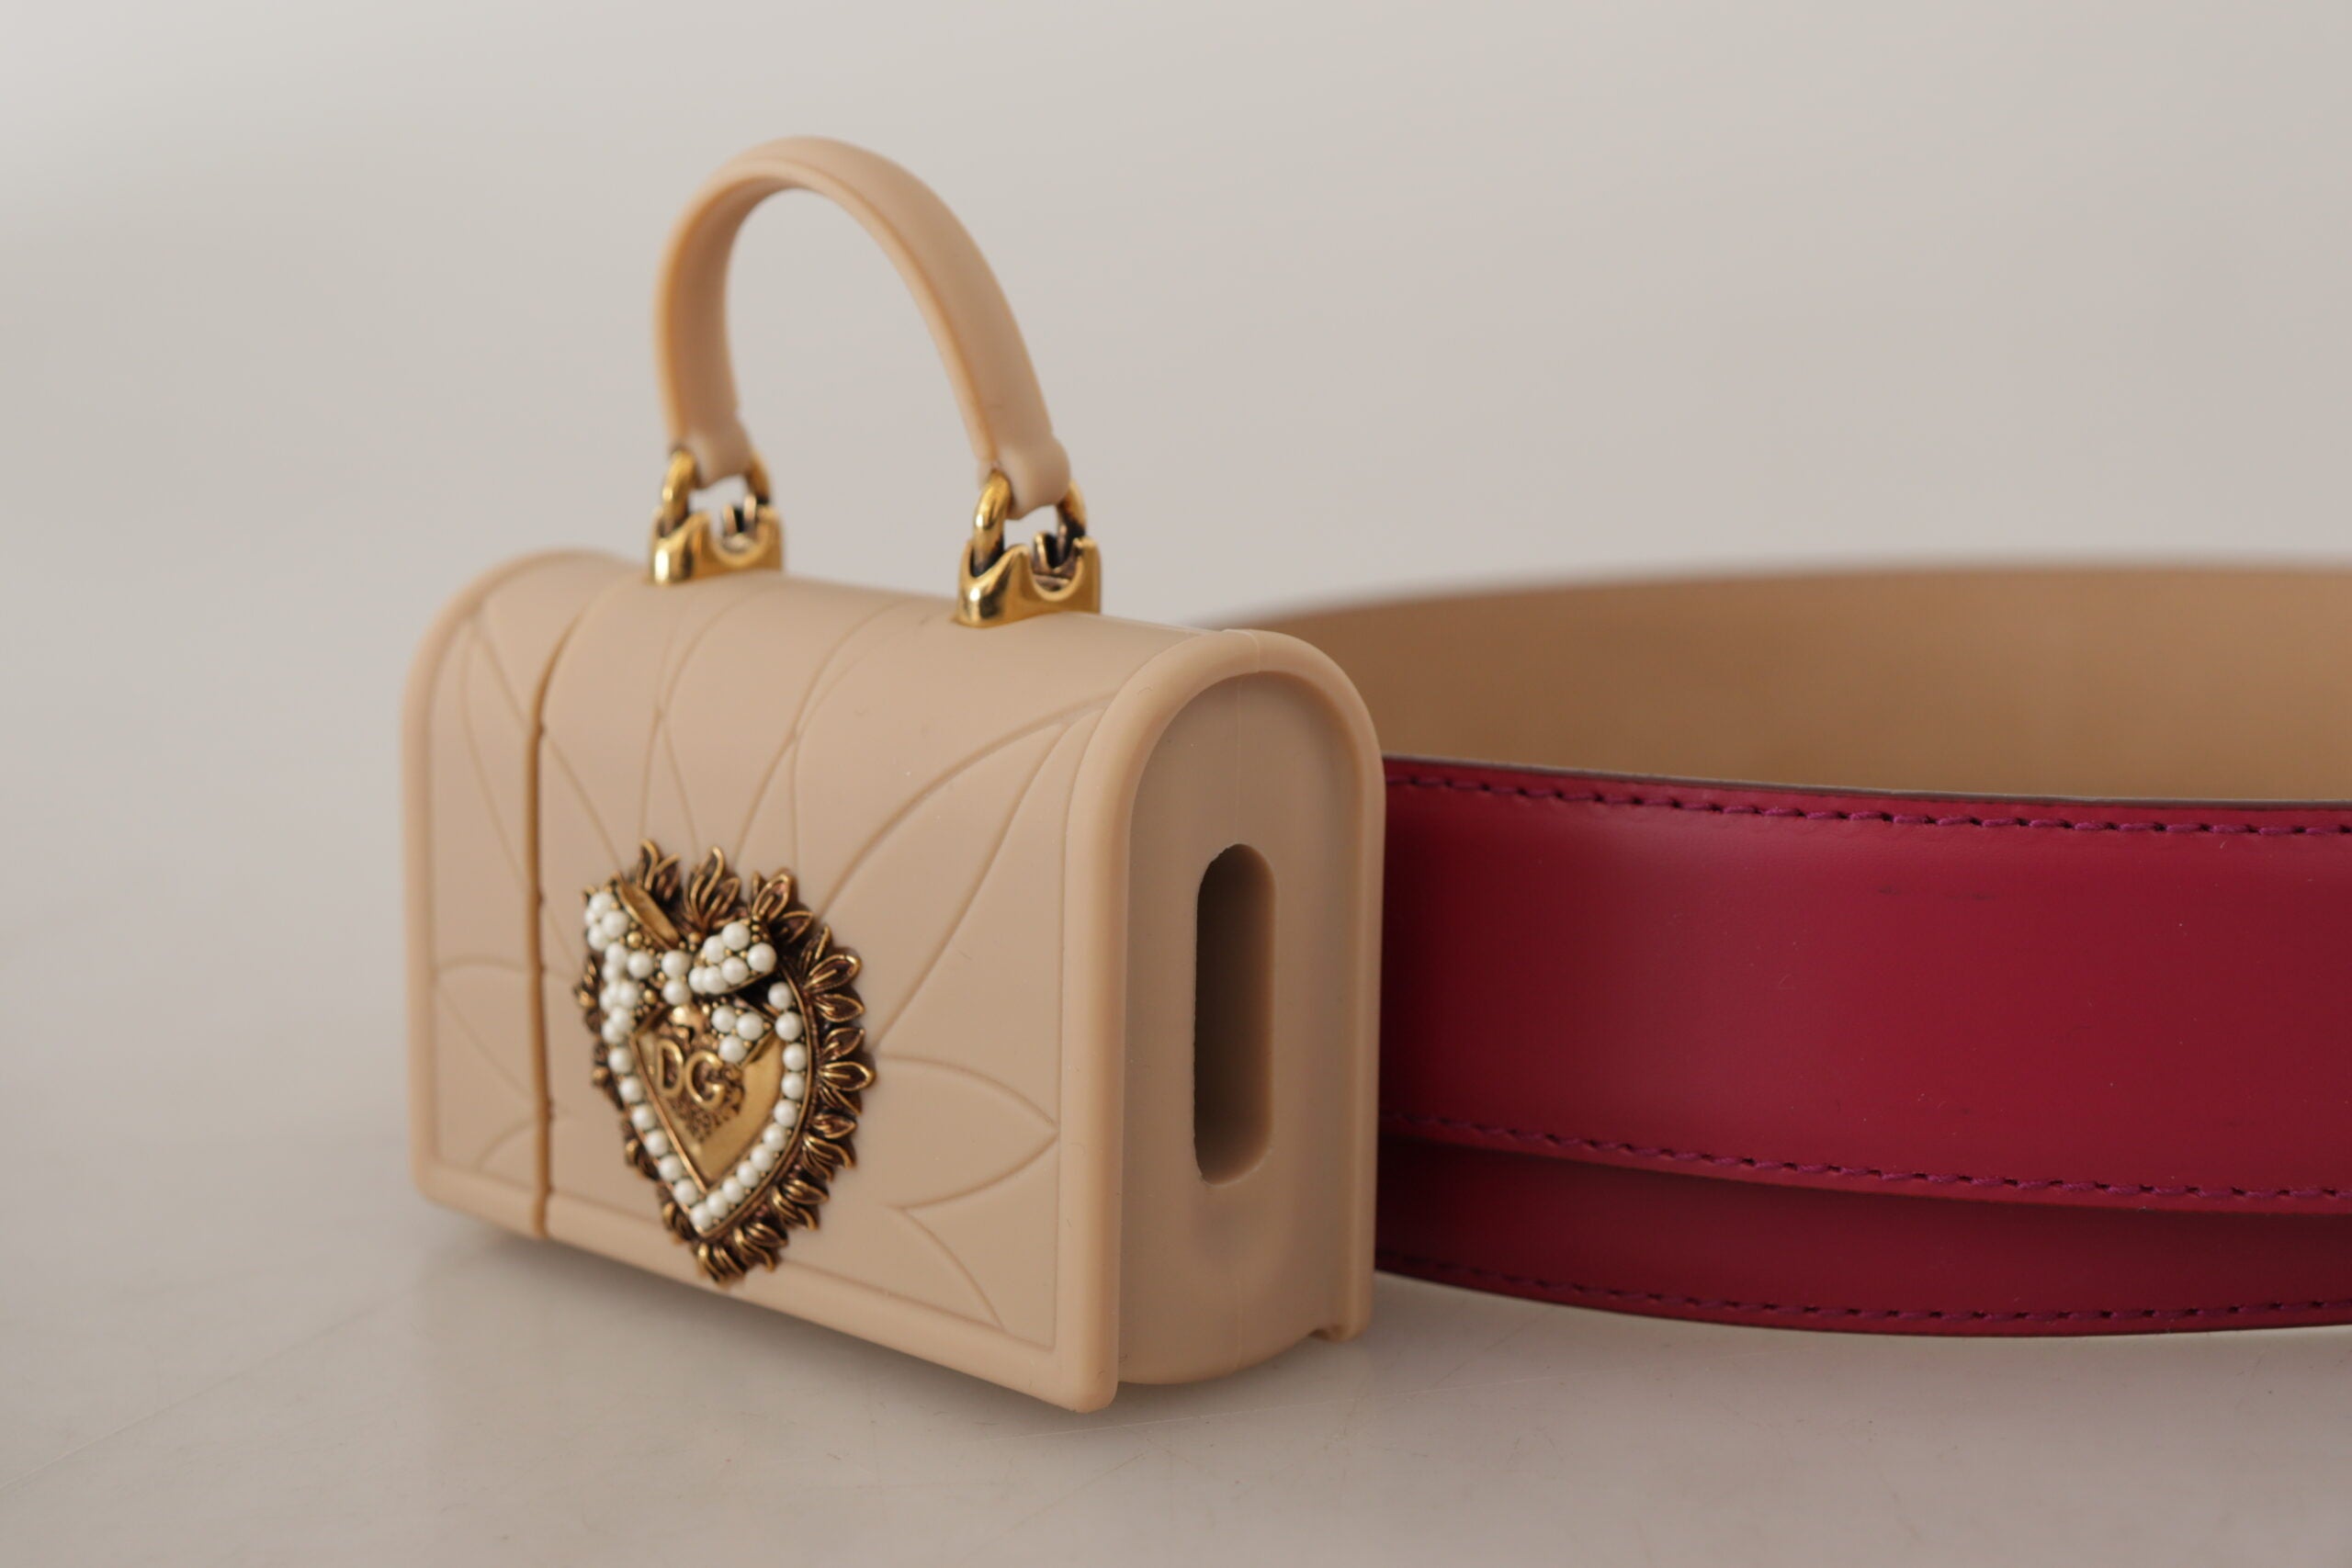 Dolce & Gabbana Elegant Pink Leather Belt with Headphone Case